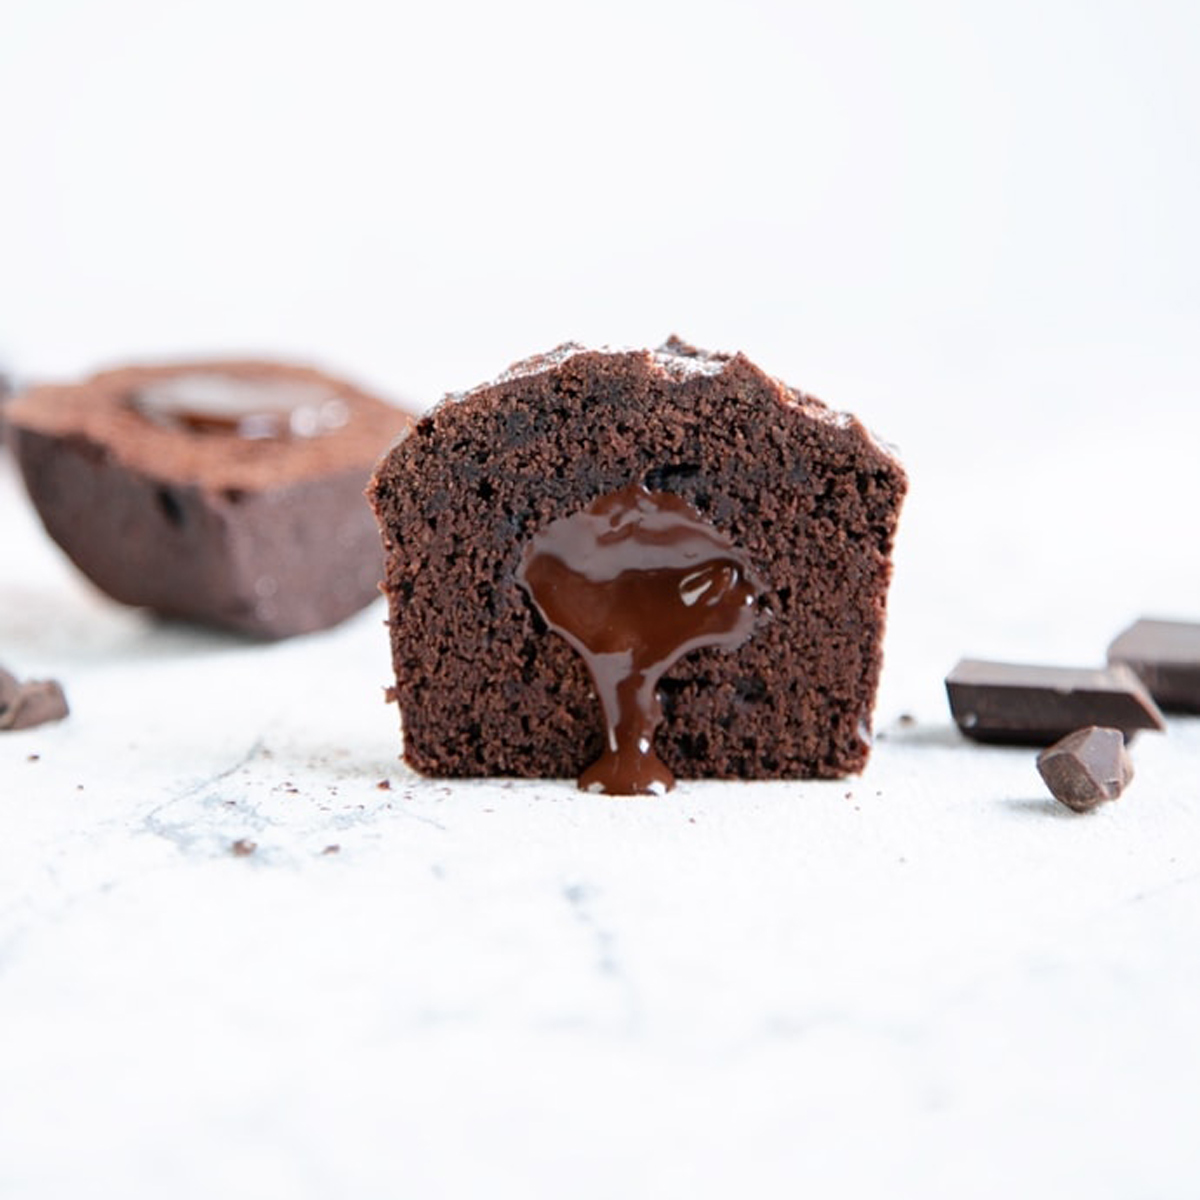 How to Temper Chocolate Correctly - Veena Azmanov